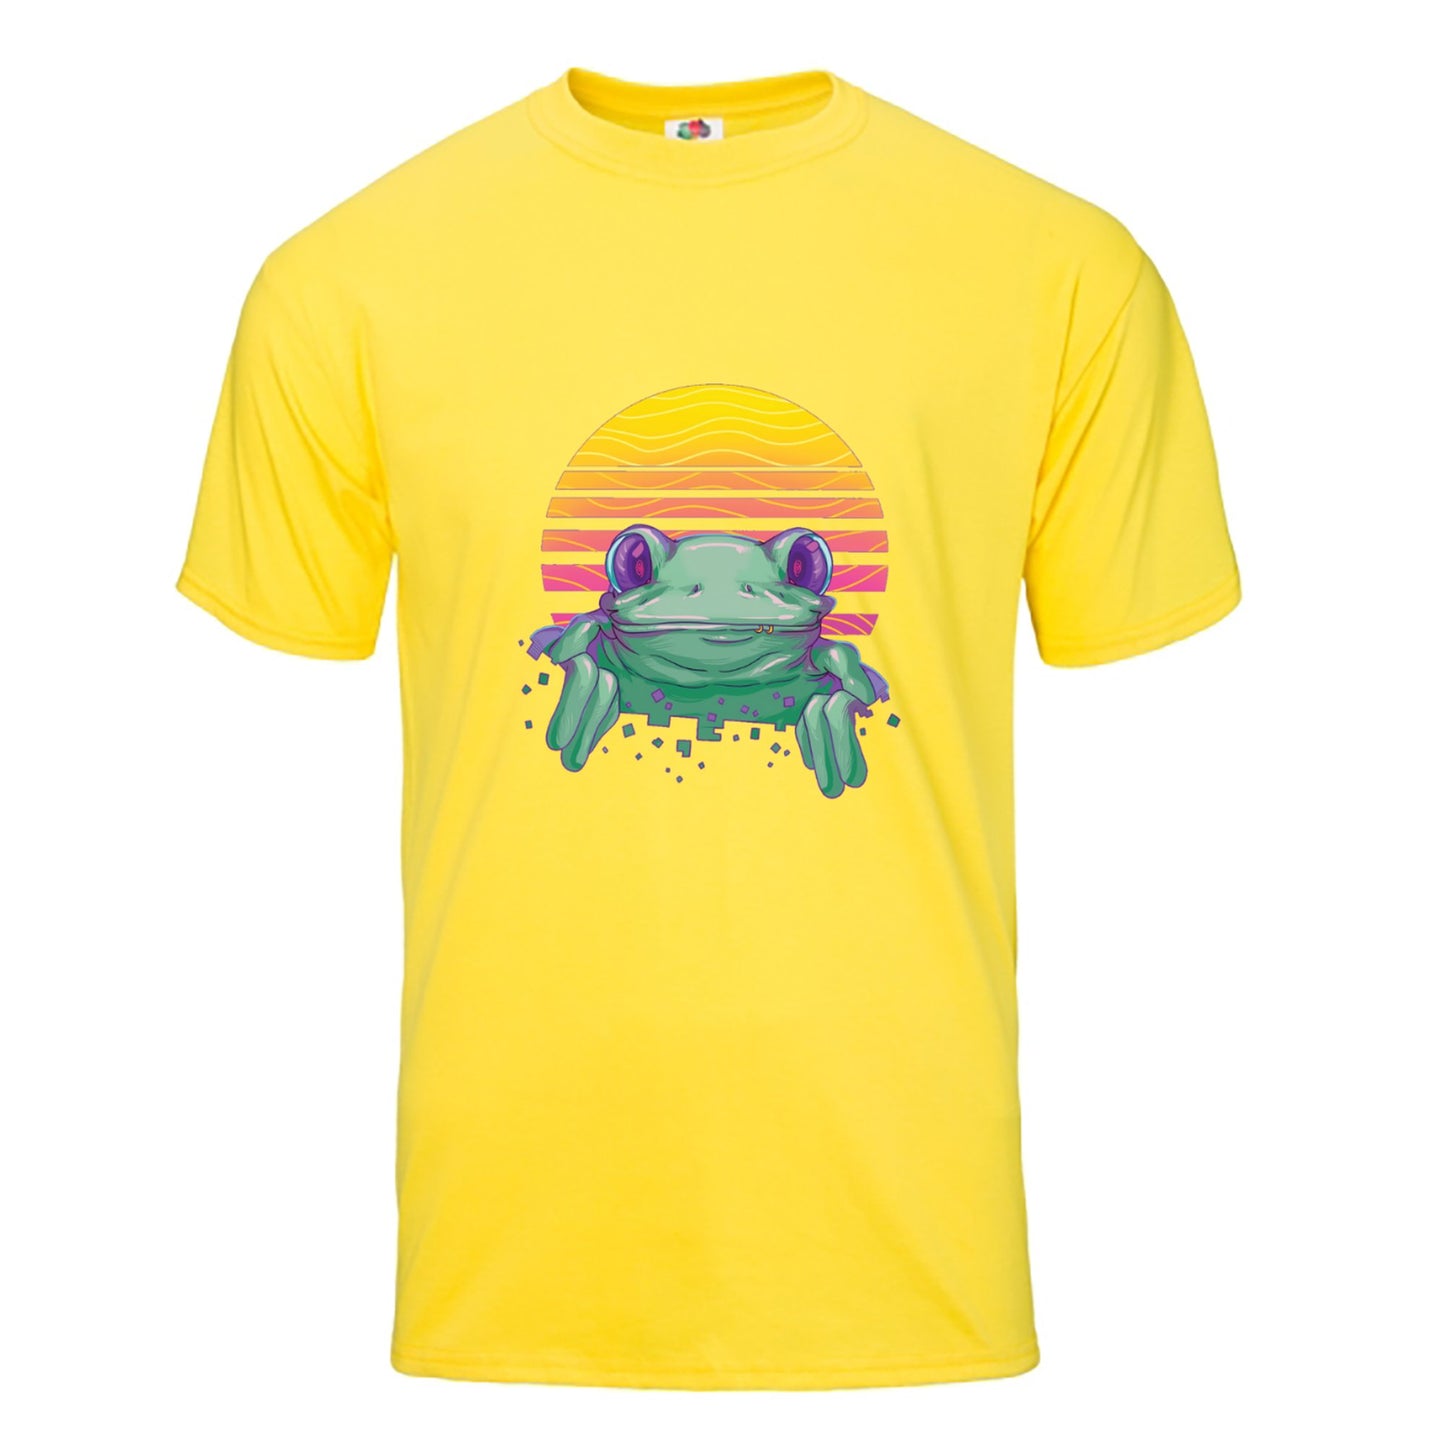 Techno Frog Tee Shirt - Hypno Monkey